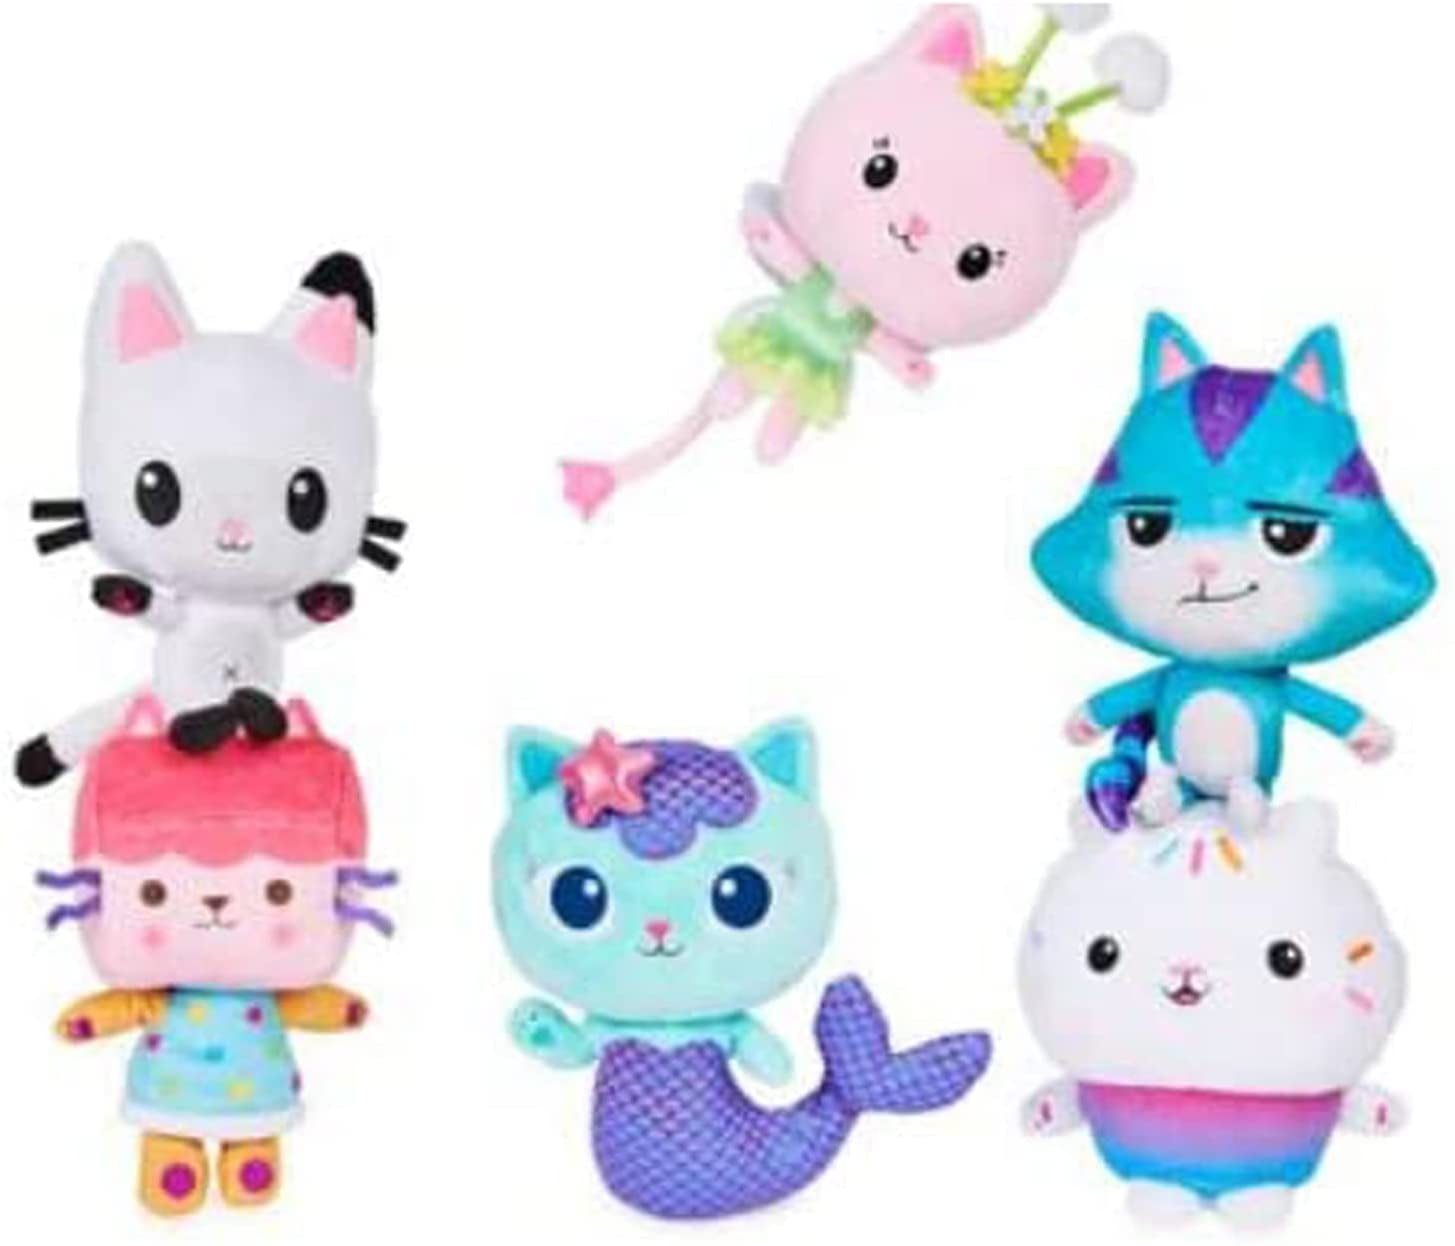 Gabbys Dollhouse Gabby, Pandy Paws, Baby Box Cat, MerCat, Kitty Fairy,  Cakey Cat CatRat 7-Piece Deluxe Figure Set Spin Master - ToyWiz